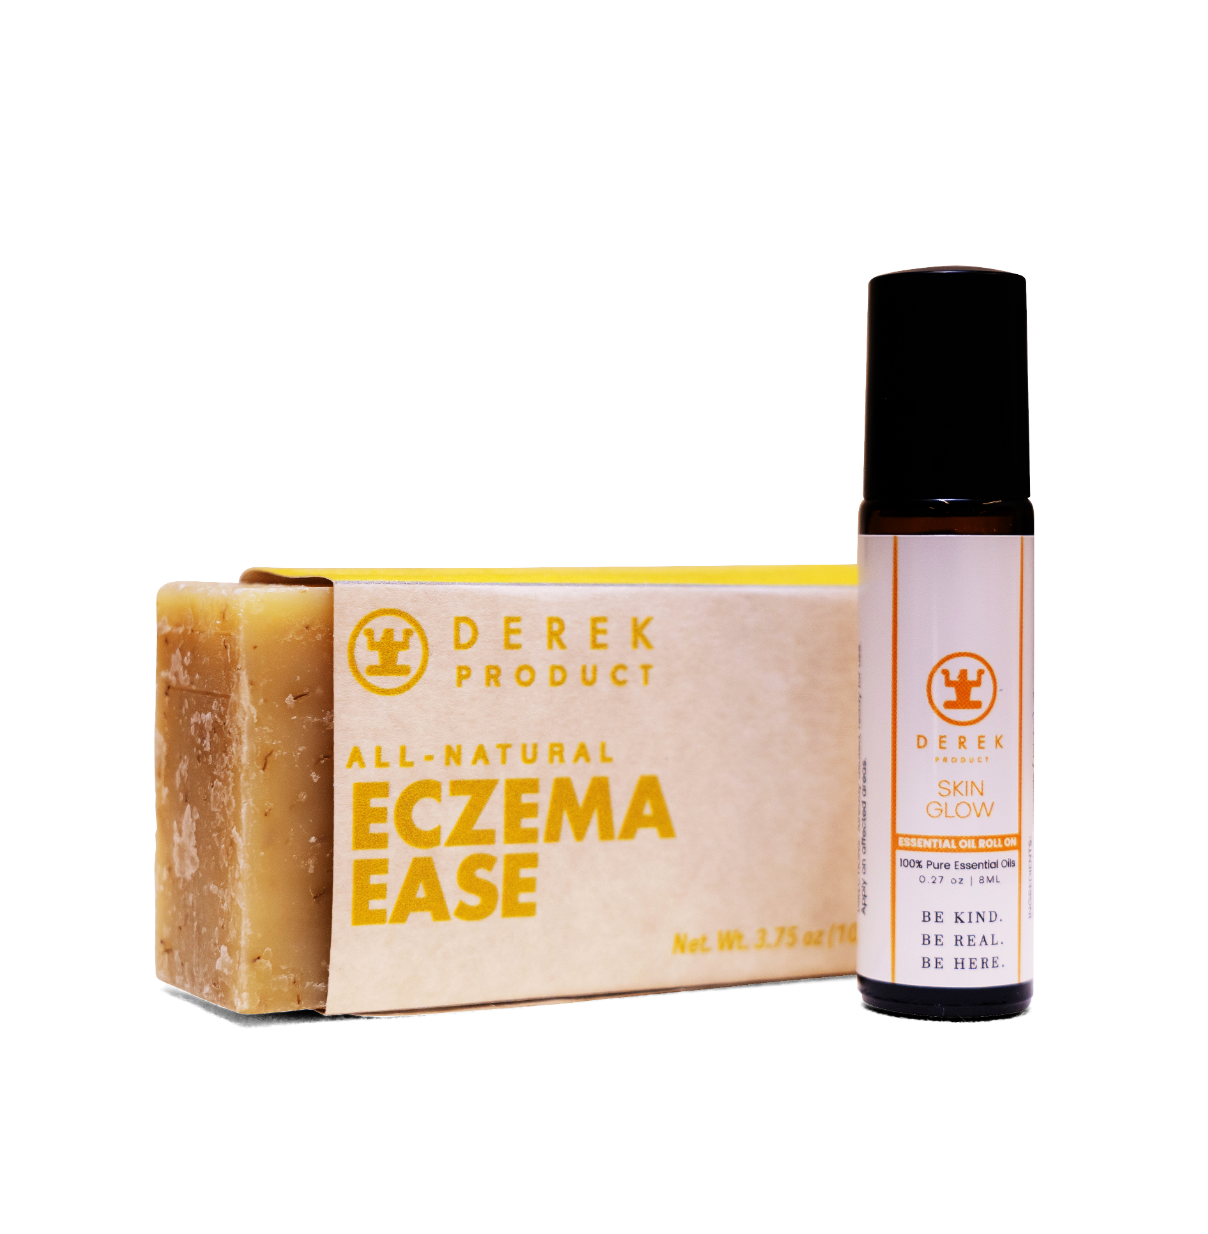 Eczema Ease Bundle - Derek Product